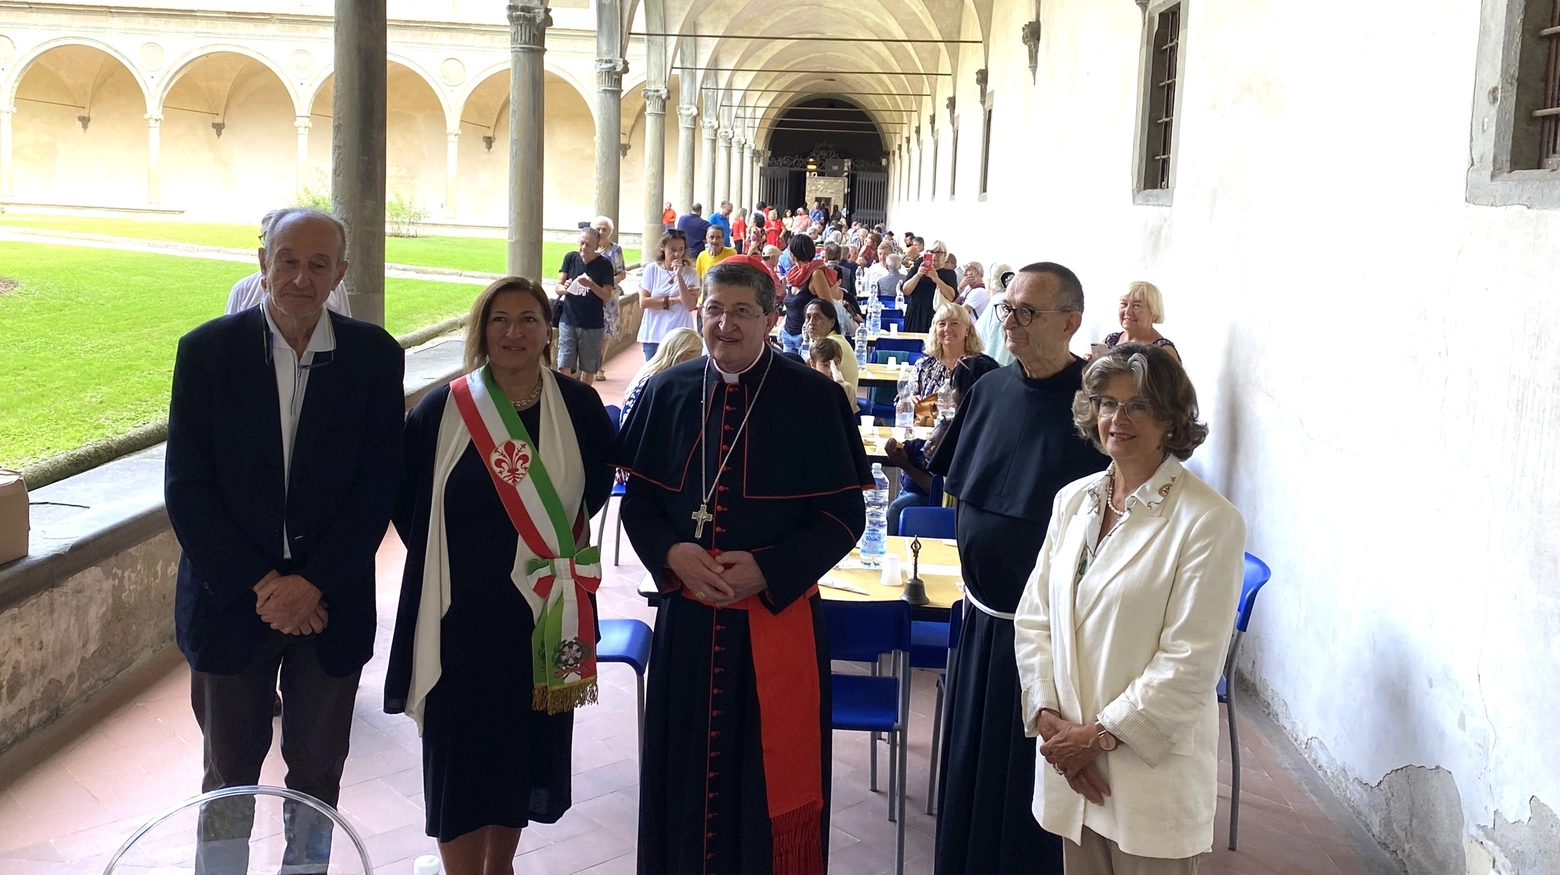 Da sinistra, Riccardo Bonechi, l'assessore Maria Federica Giuliani, il cardinale arcivescovo Giuseppe Betori, padre Giancarlo Corsini e Cristina Acidini